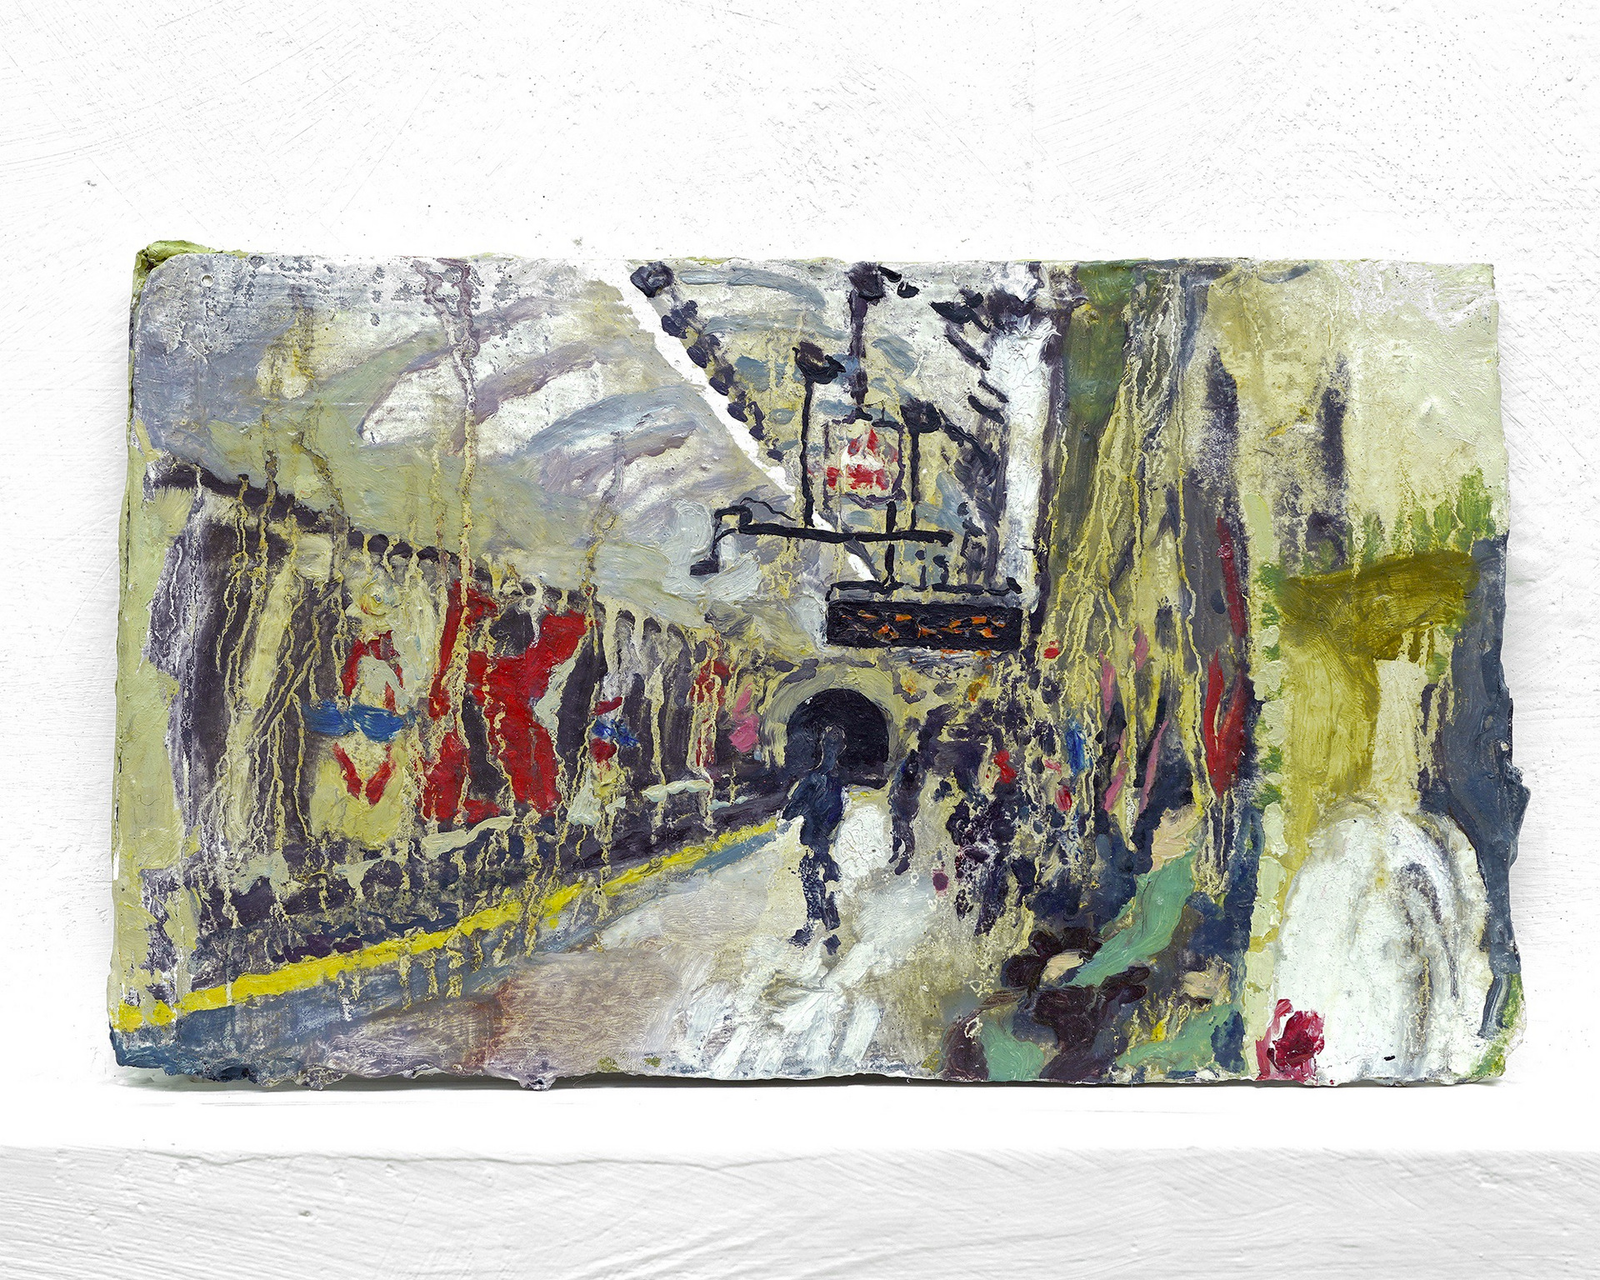 Melted drippy painting depicting undderground train platform landscape